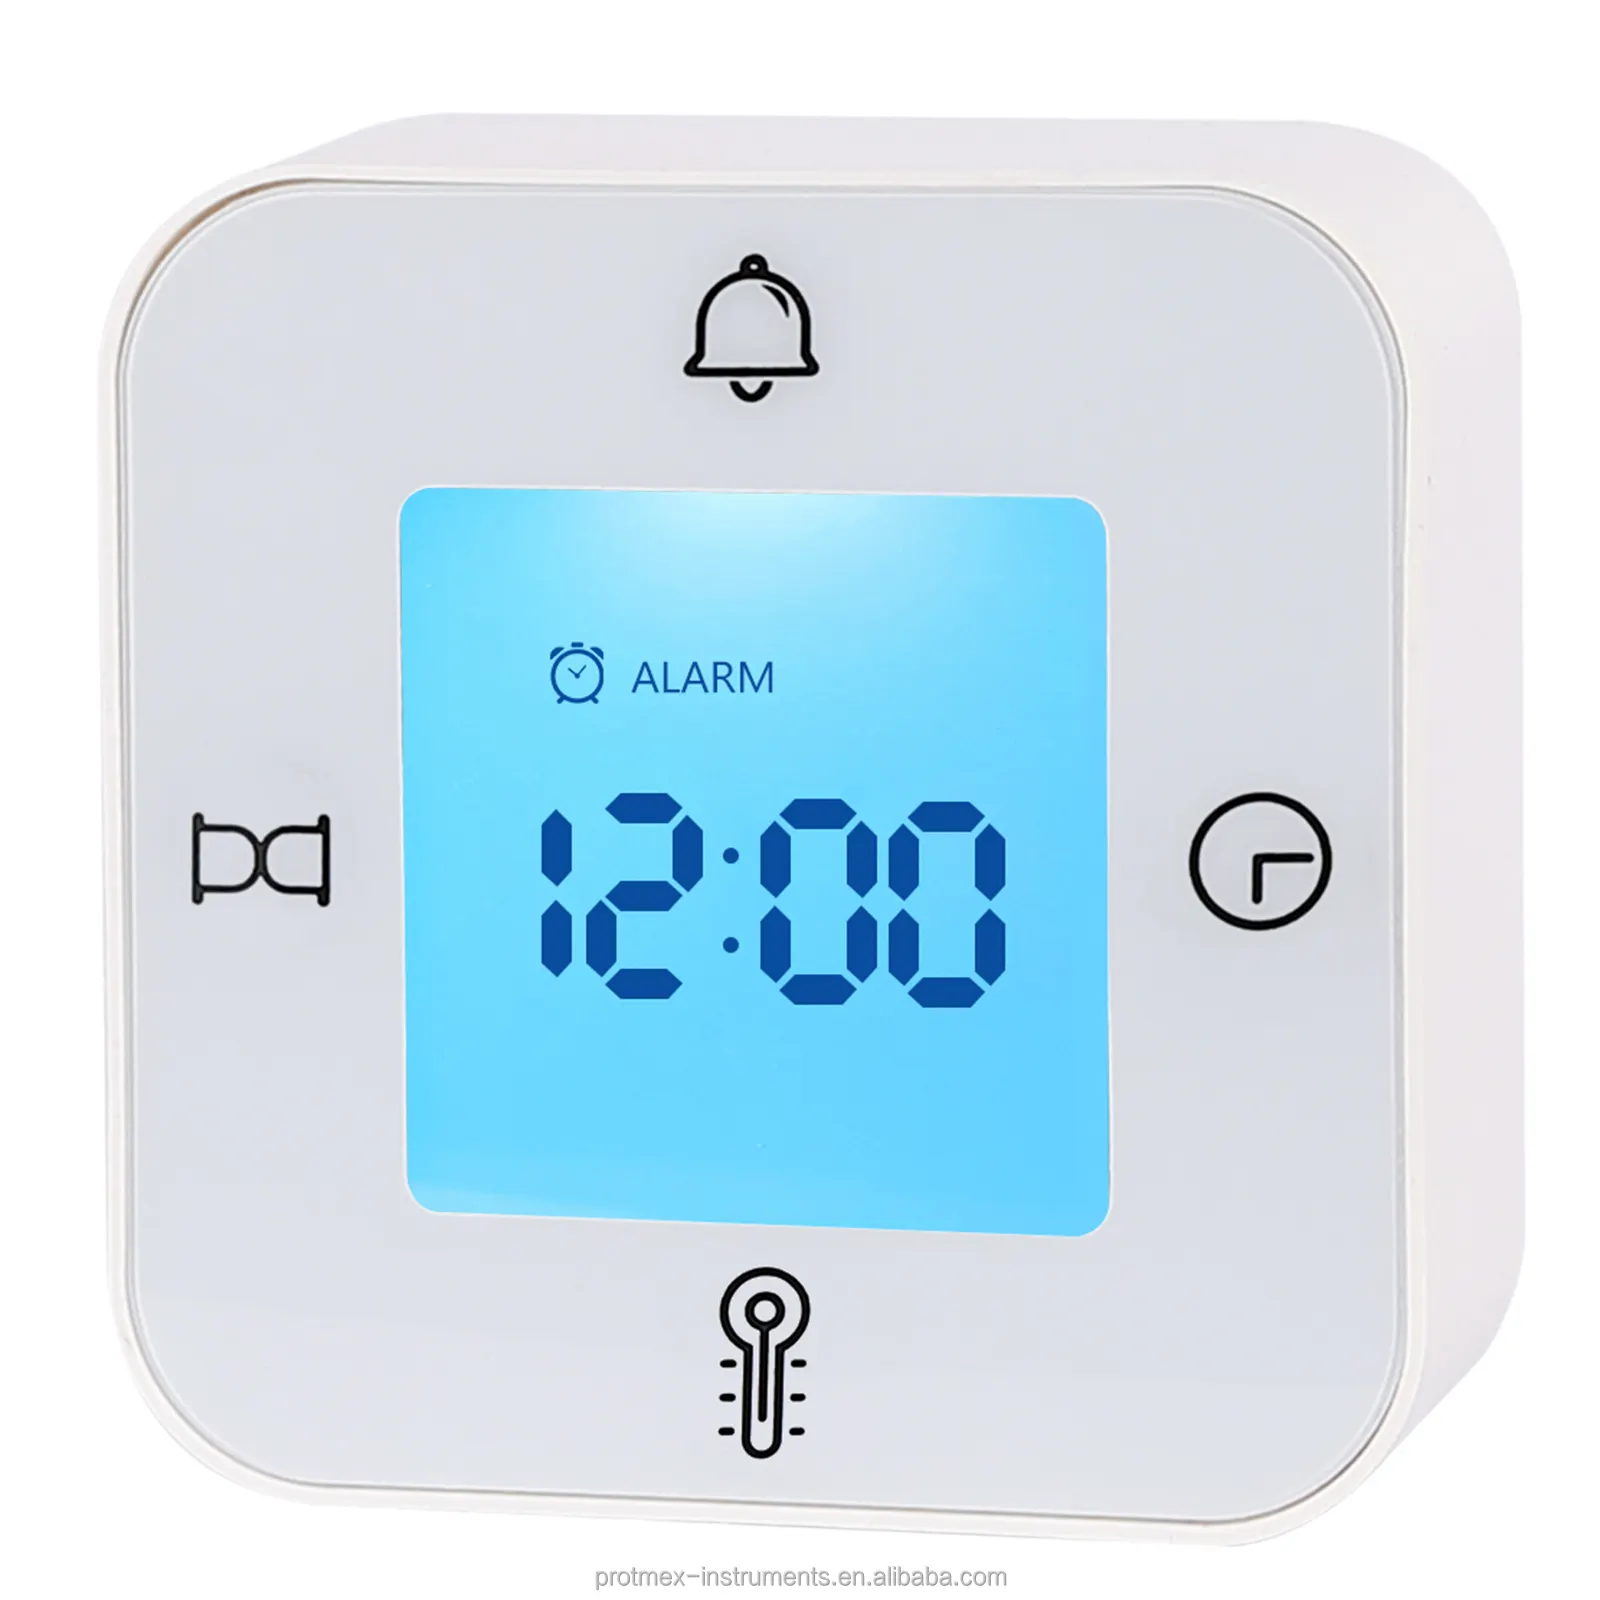 Promotional Multifunction Alarm Clock Digital Timer Temperature Calendar Desktop Alarm Clock Square ABS Electronic Clock Concise